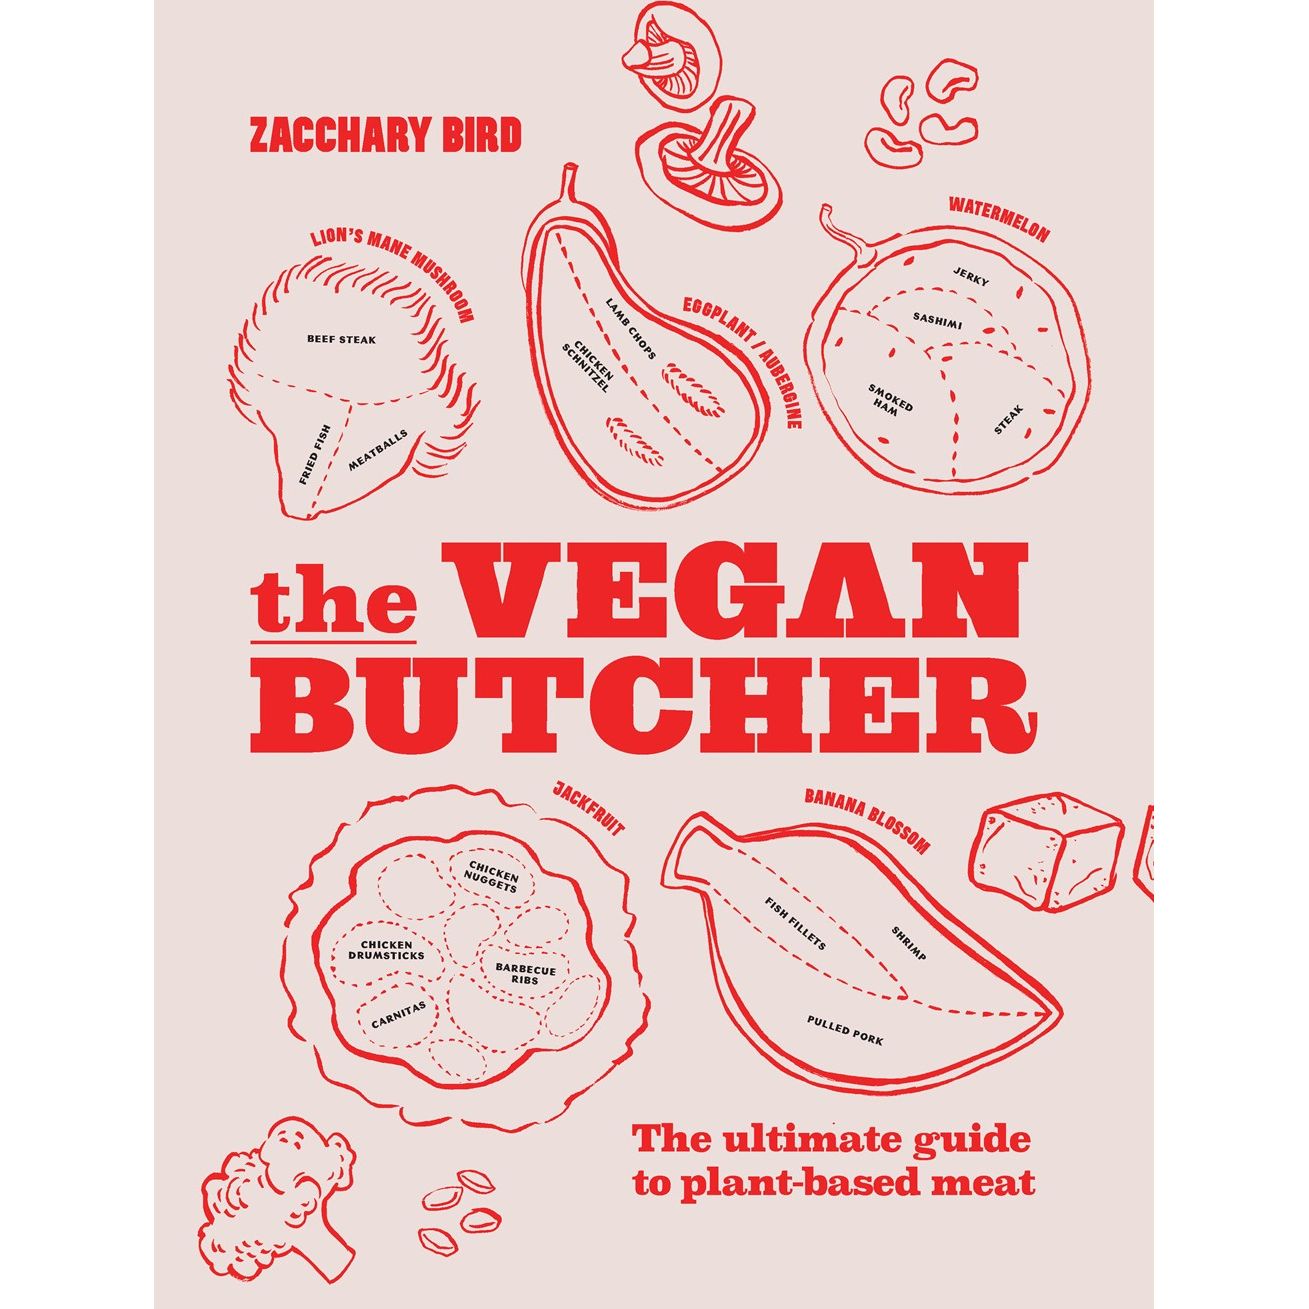 The Vegan Butcher (Zacchary Bird)